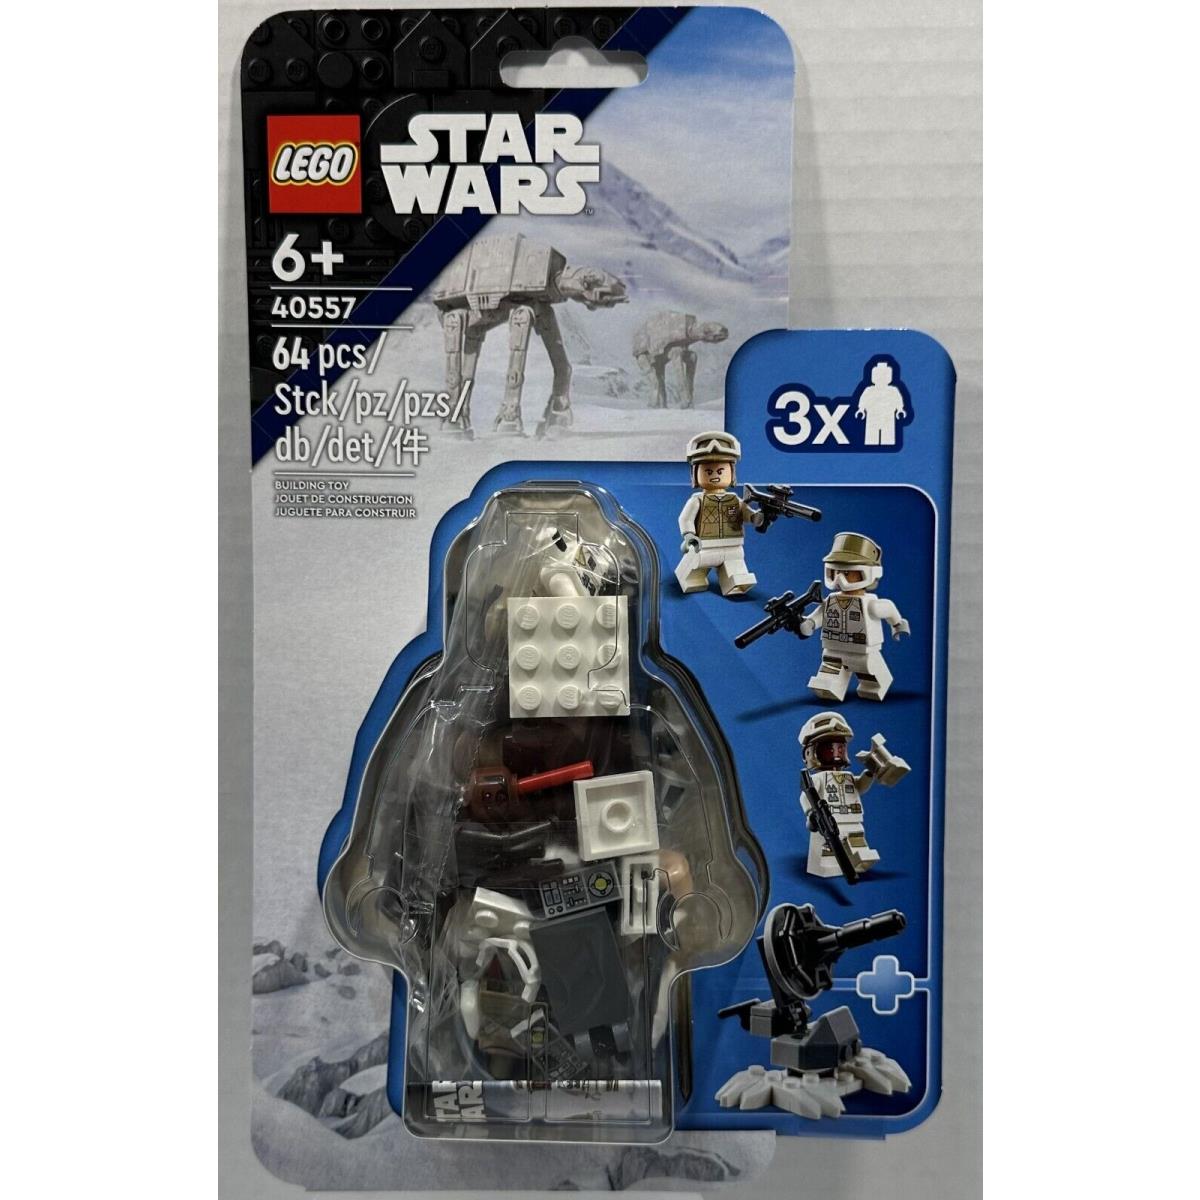 Lego Star Wars 40557 Defense of Hoth 64pcs 6+ 3 Minifigures +